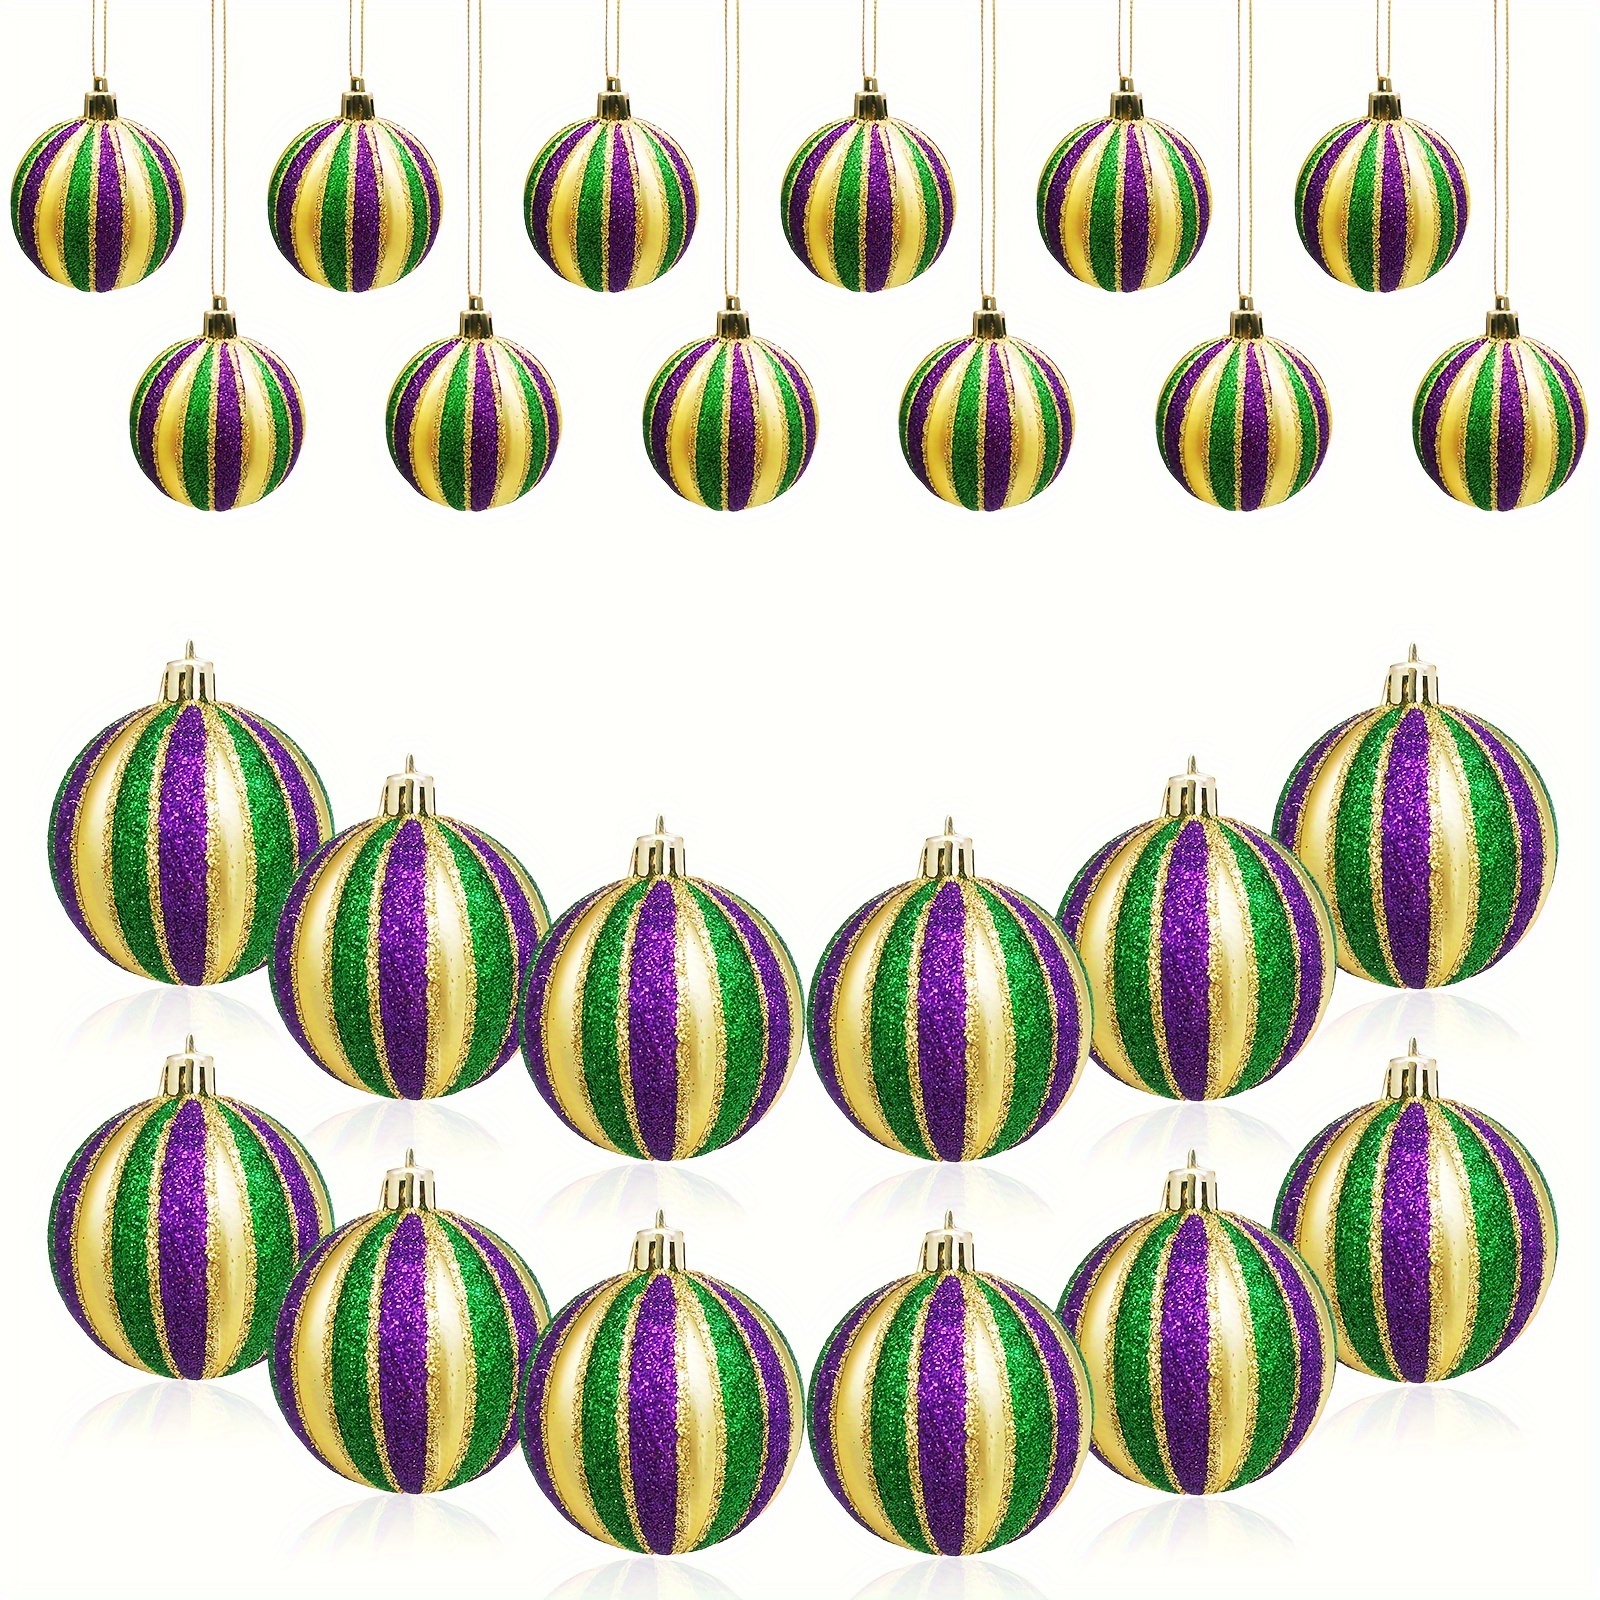 12 PCS Mardi Gras Hanging Ball Ornaments-2 Inch Mardi Gras